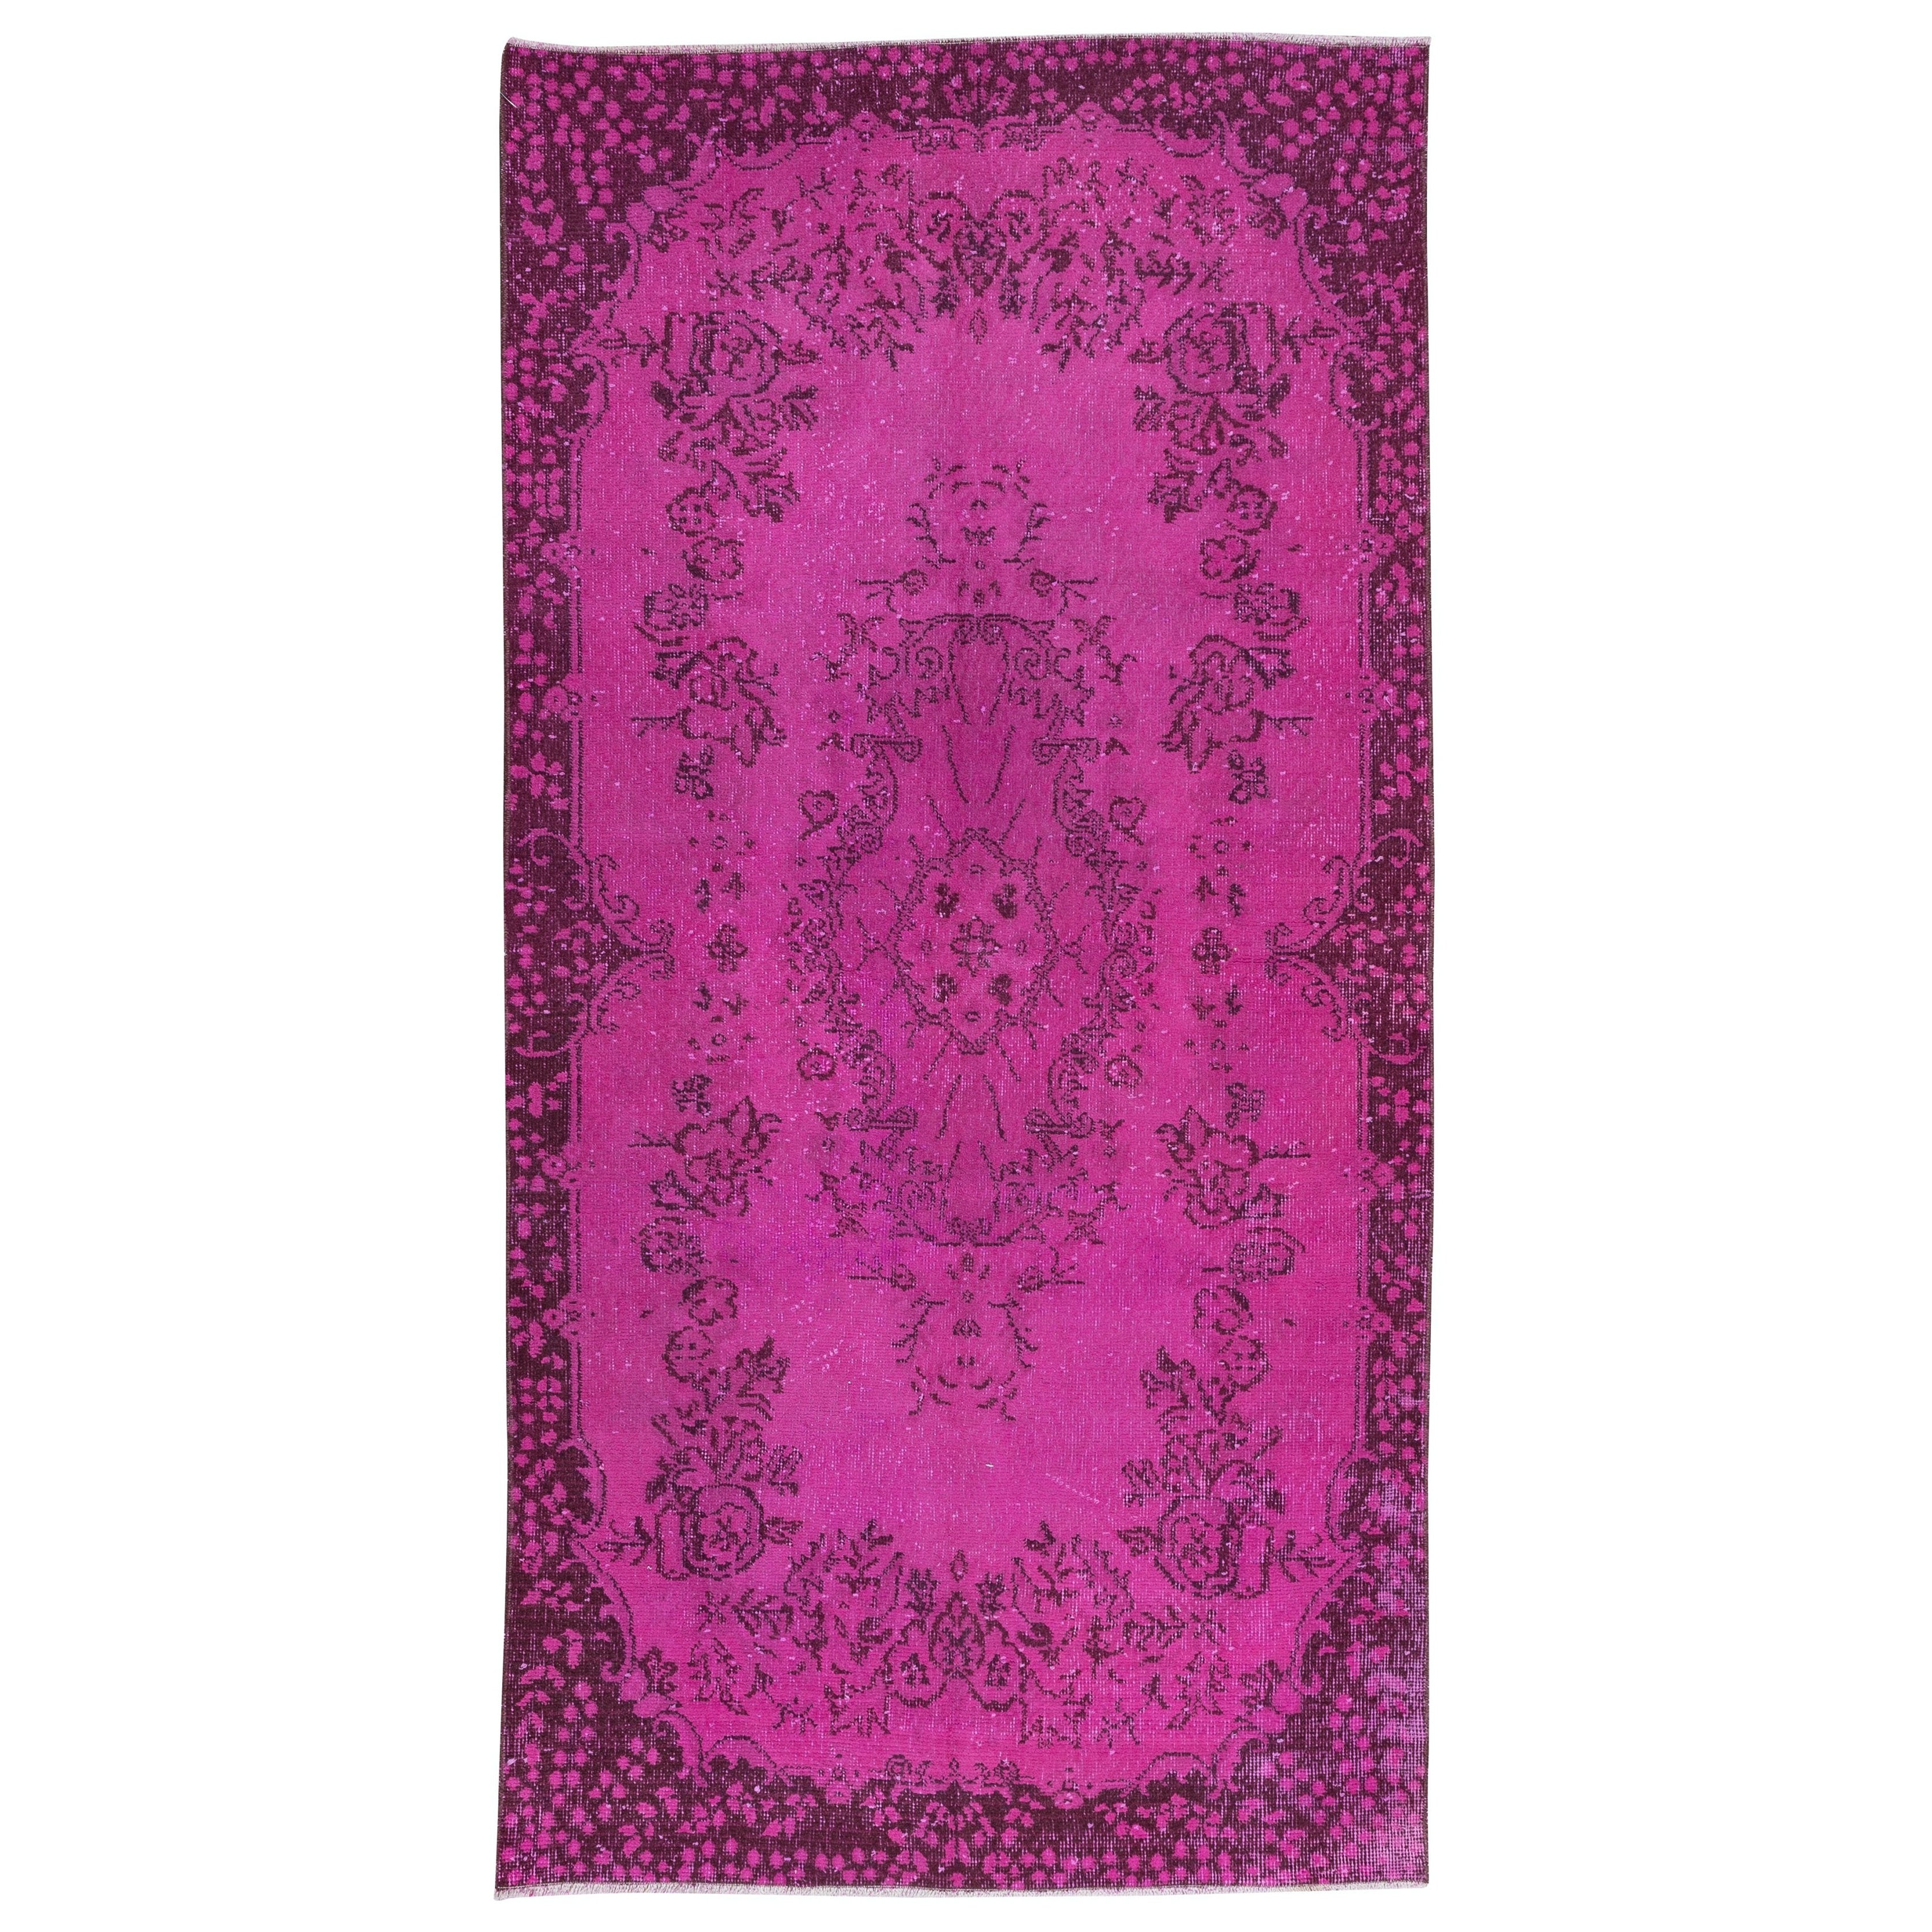 3.8x7.3 Ft Hot Pink Anatolian Wool Rug with Medallion, Modern Handmade Carpet (tapis moderne fait à la main)